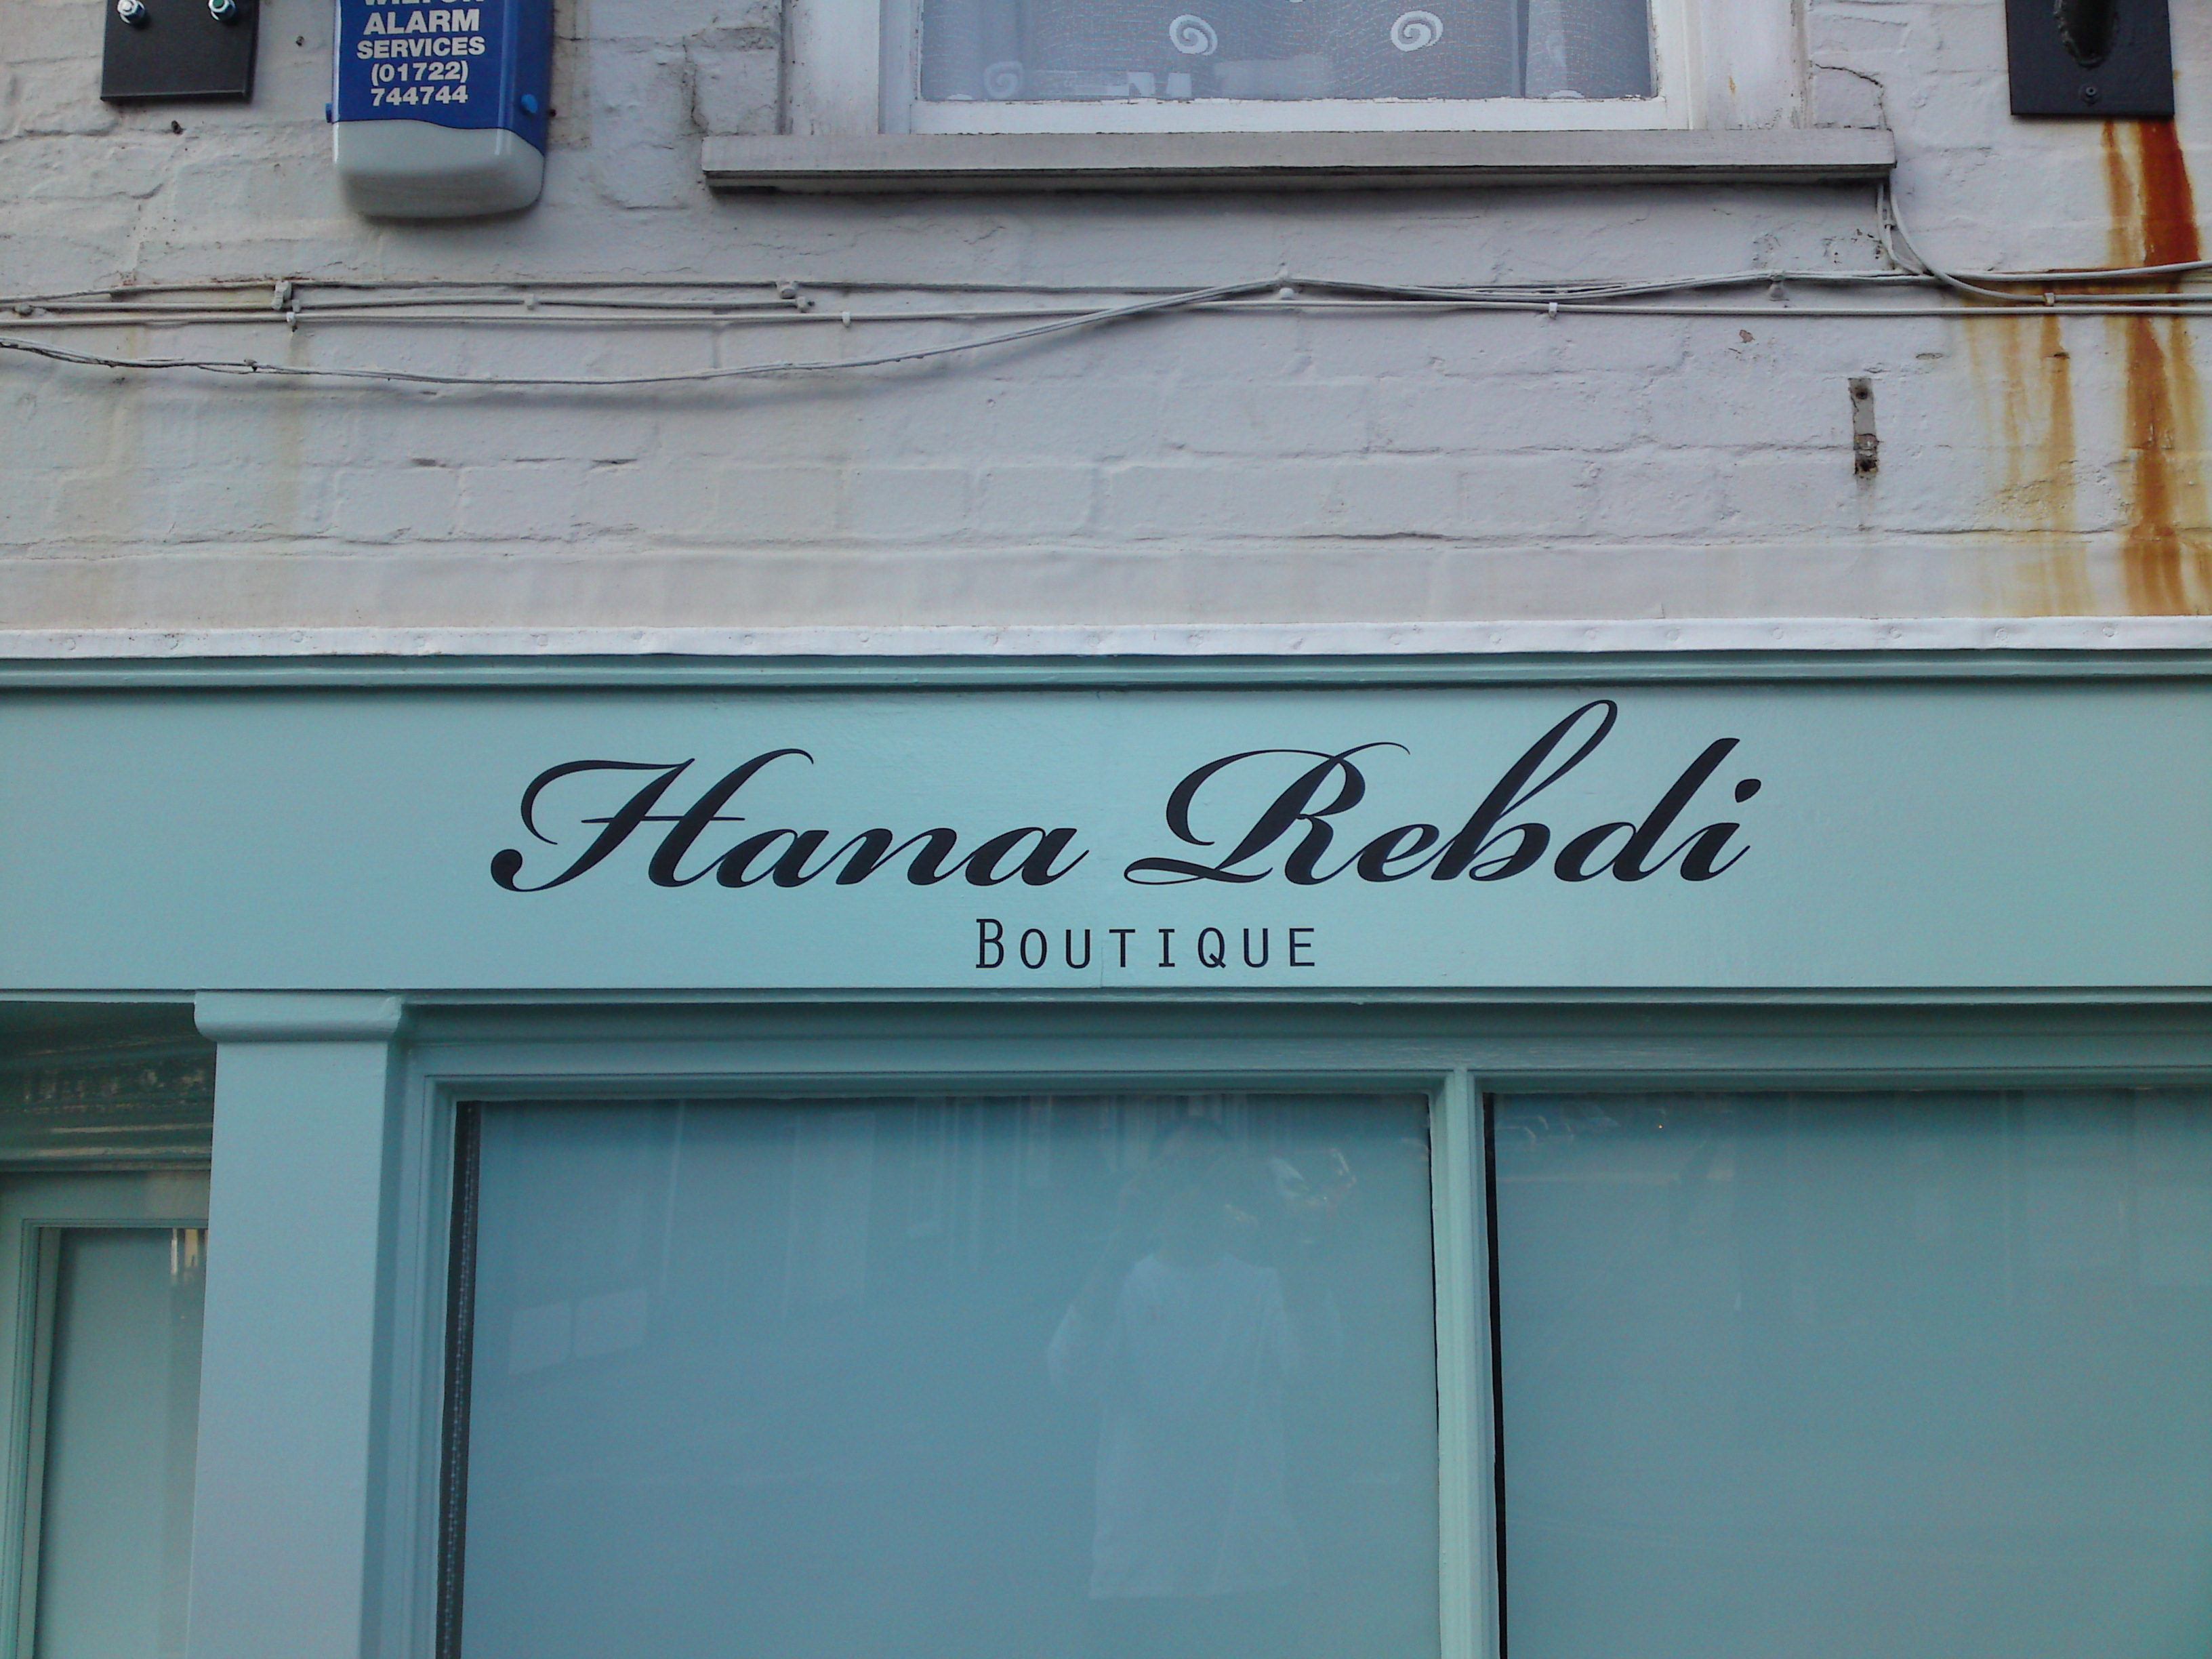 Hana Rebdi Shop Fascia Sign